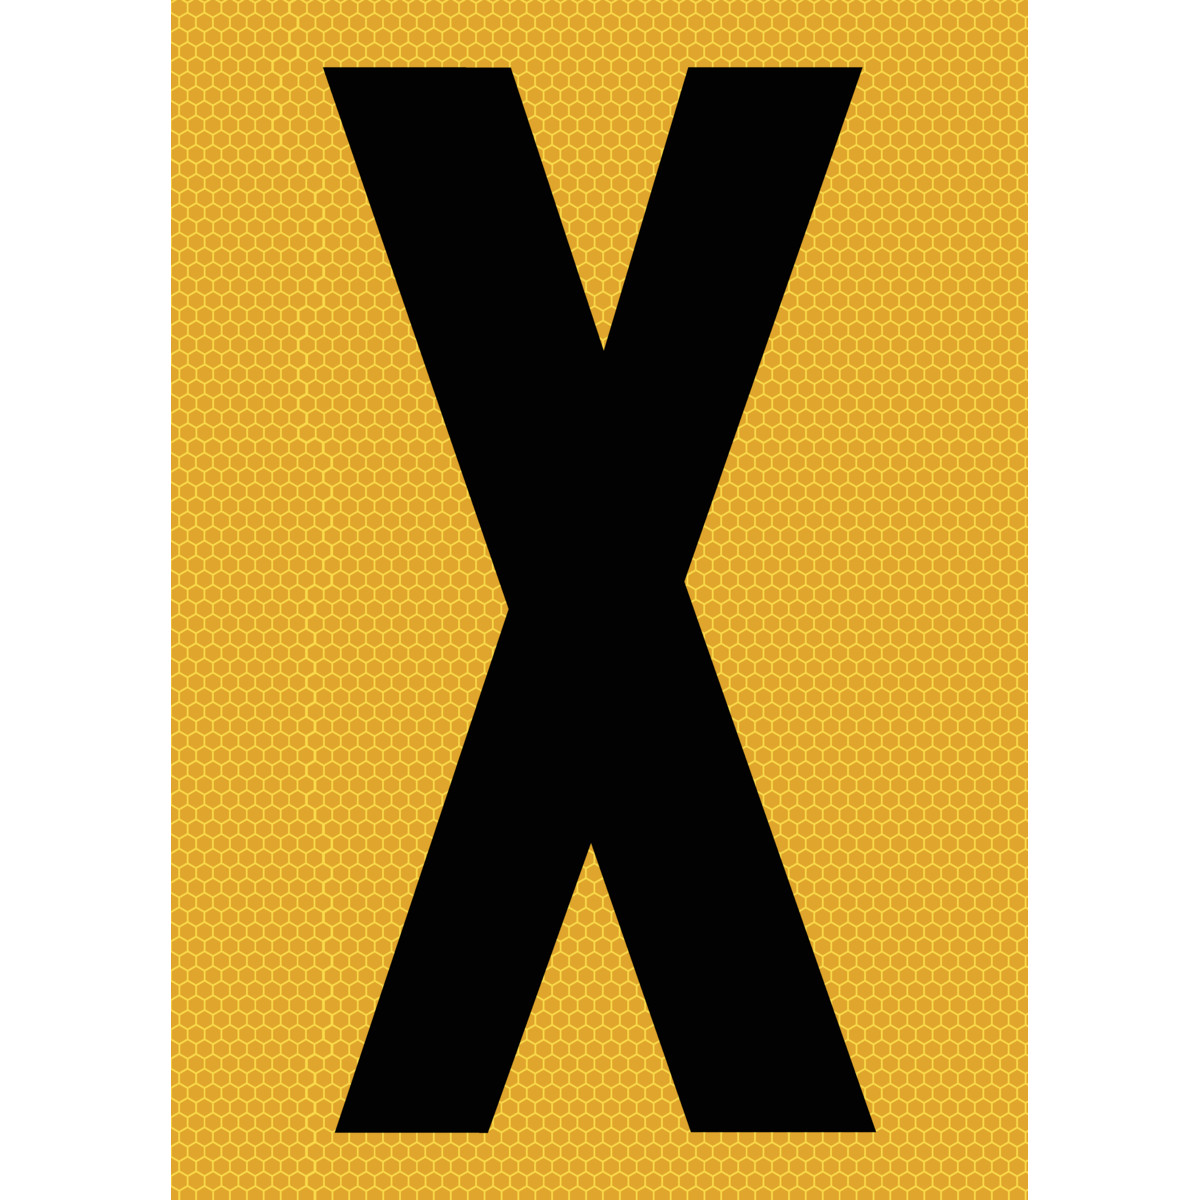 6" Black on Yellow SunBright® Reflective "X"